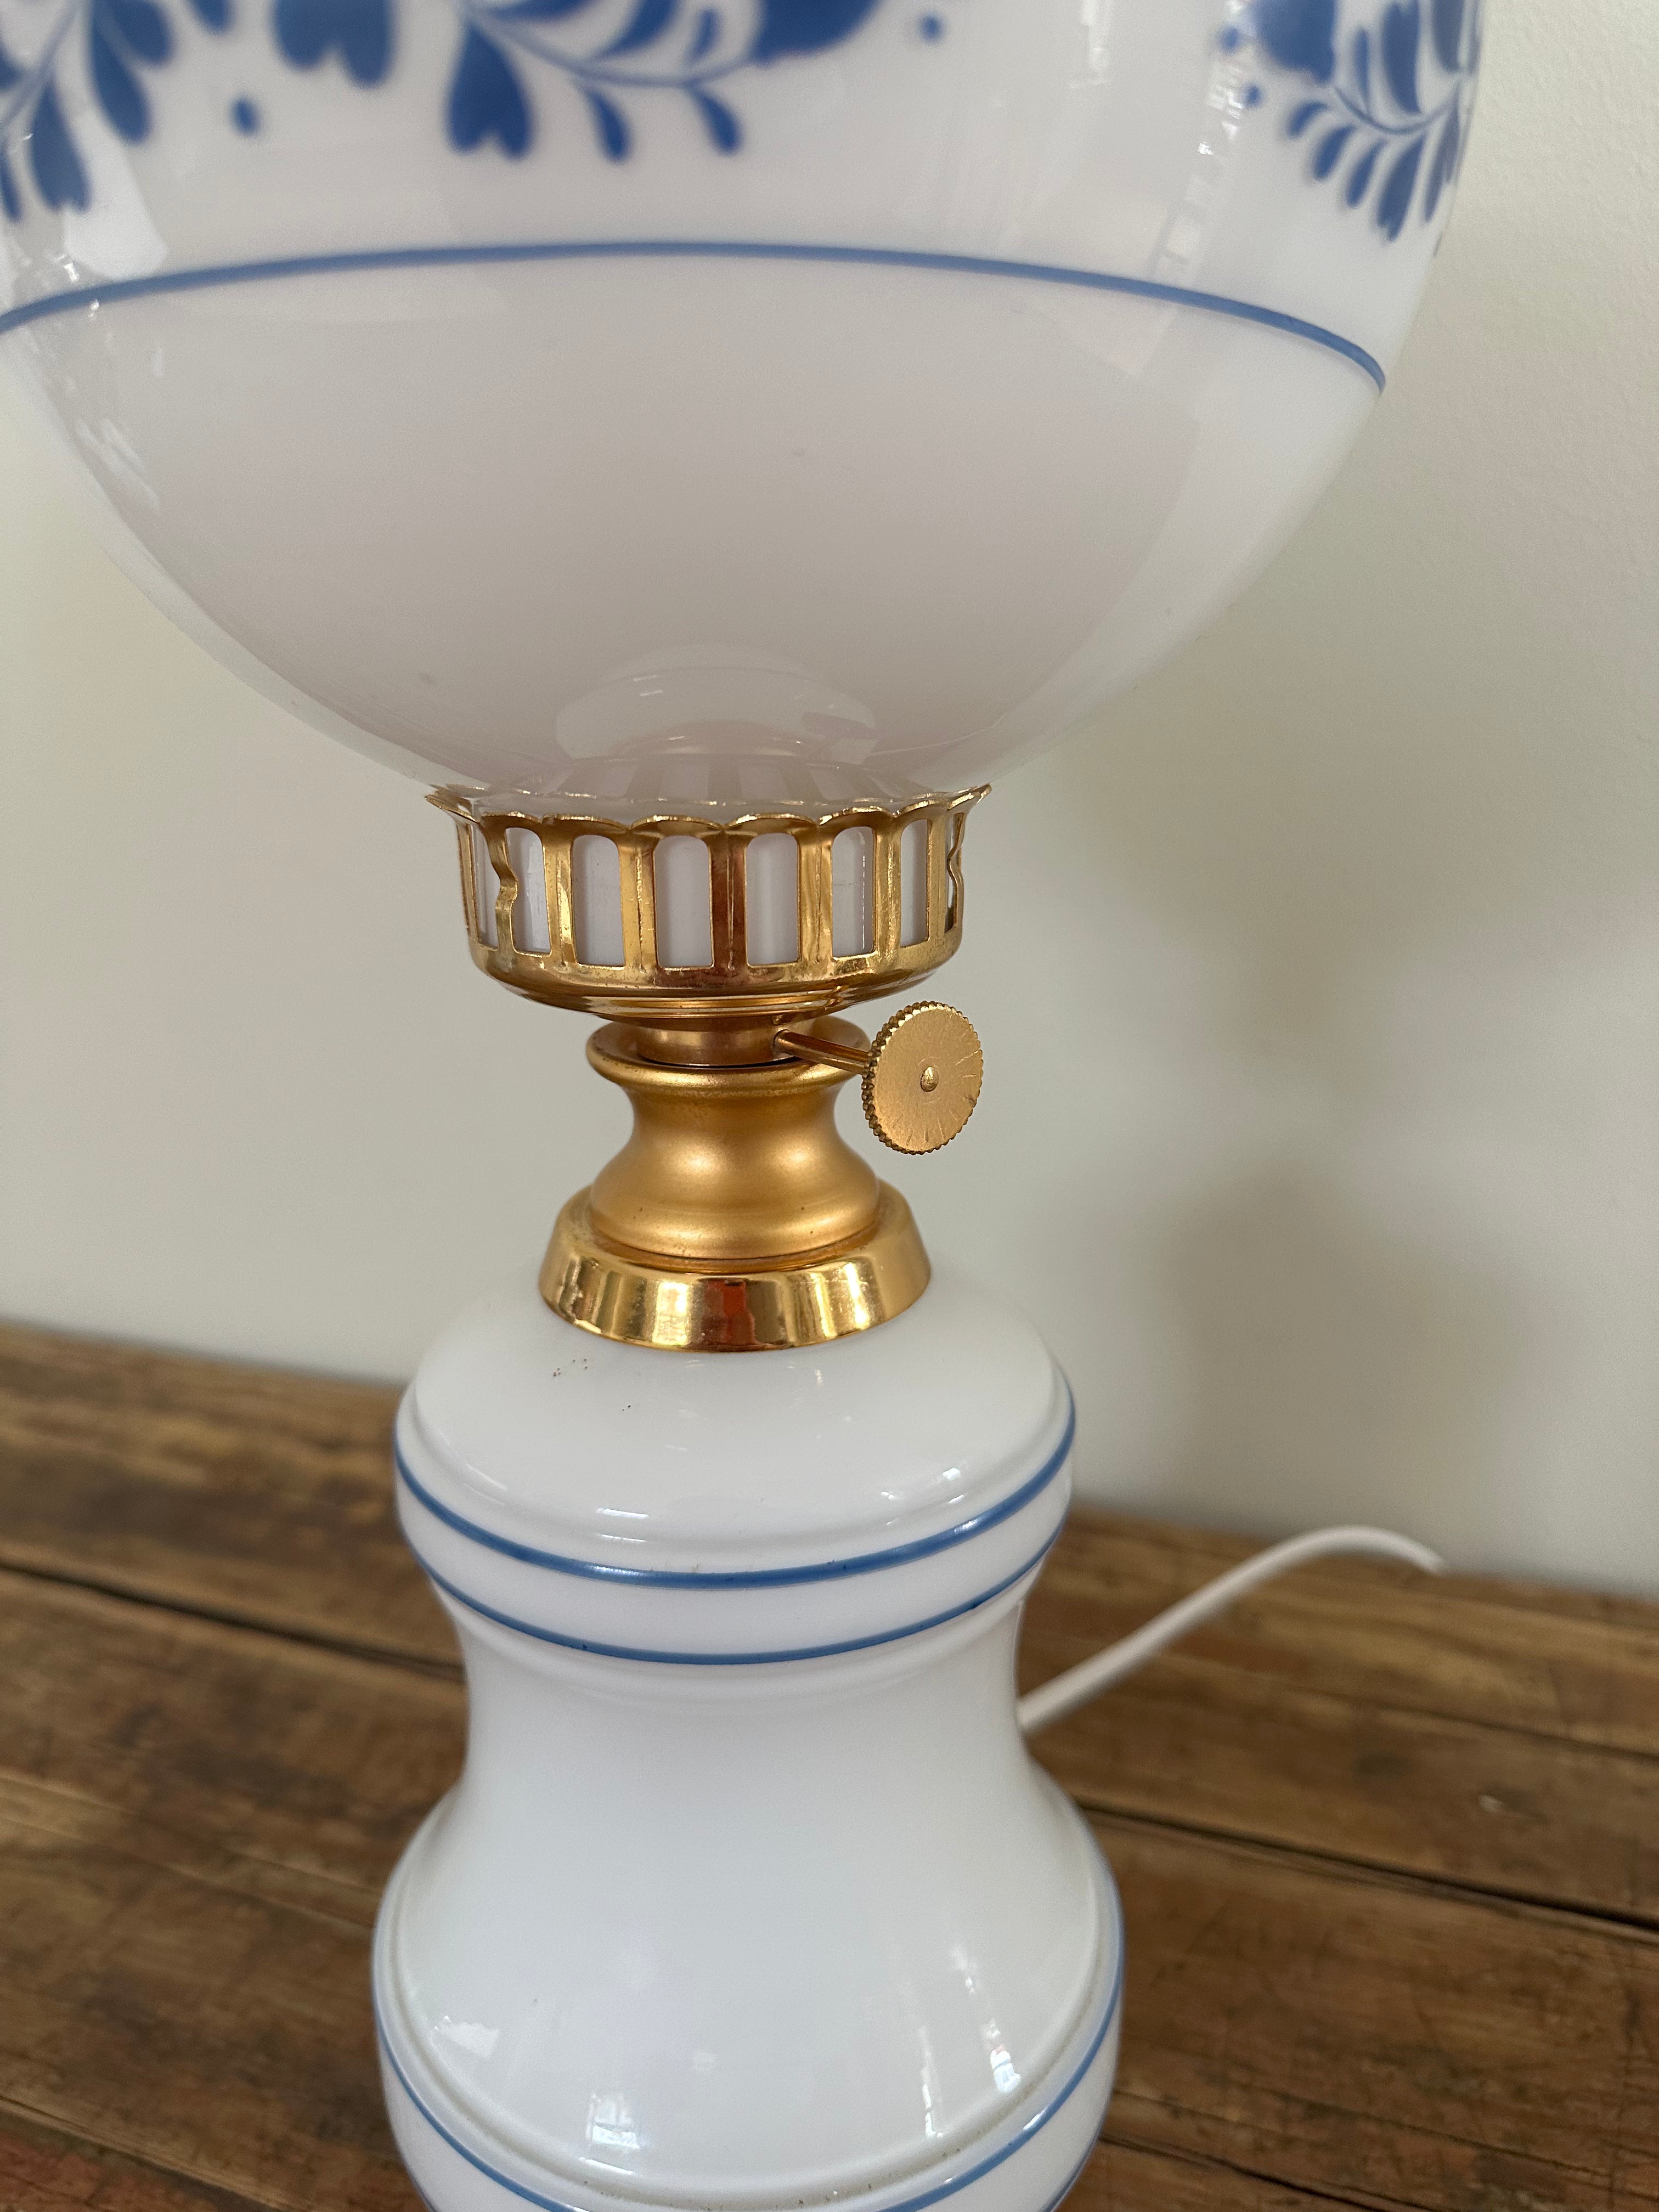 White/blue glass lamp